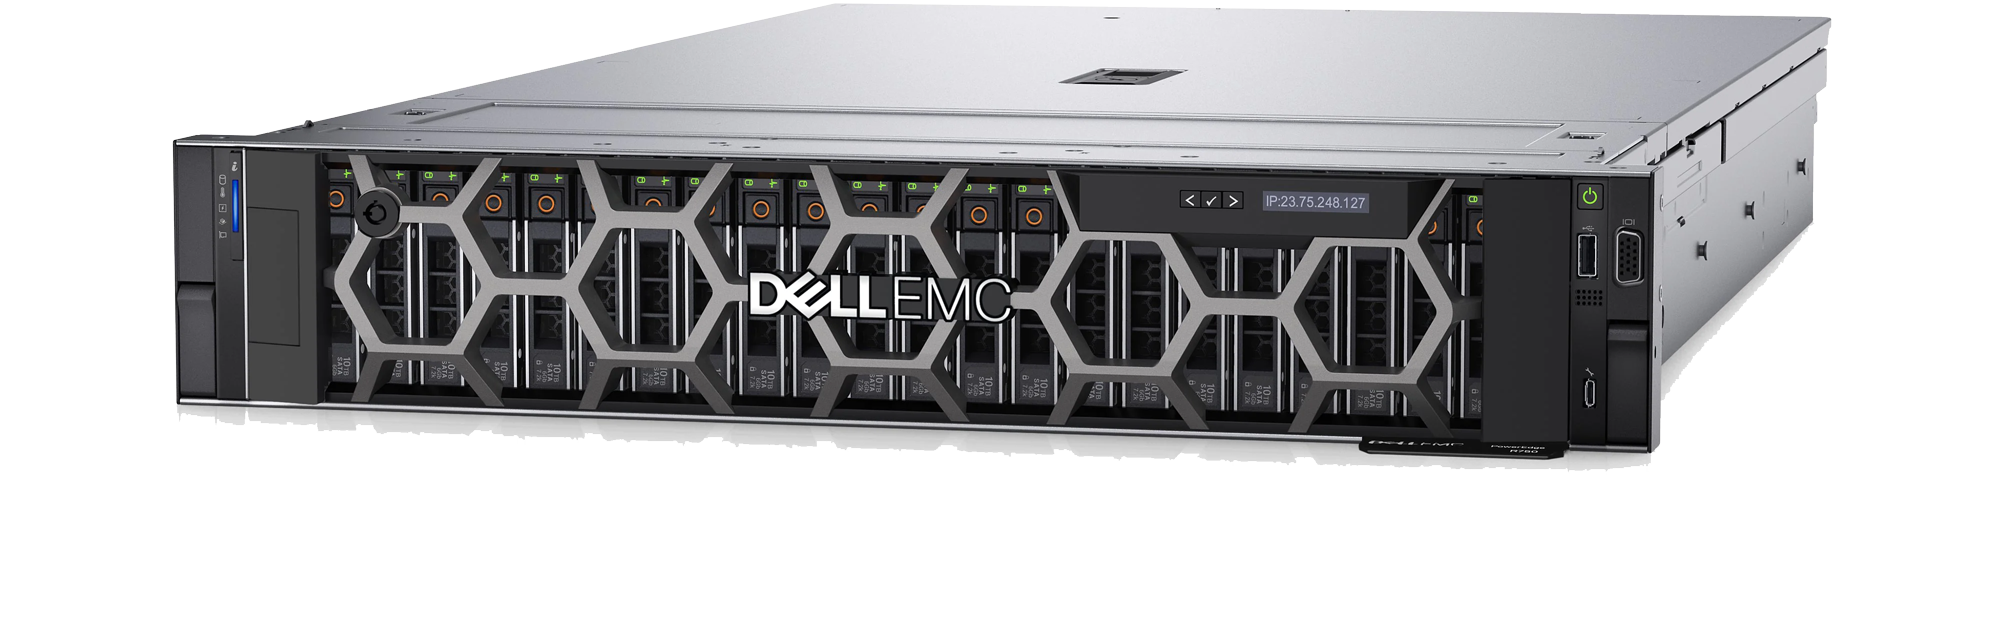 Dell Poweredge R750 Server